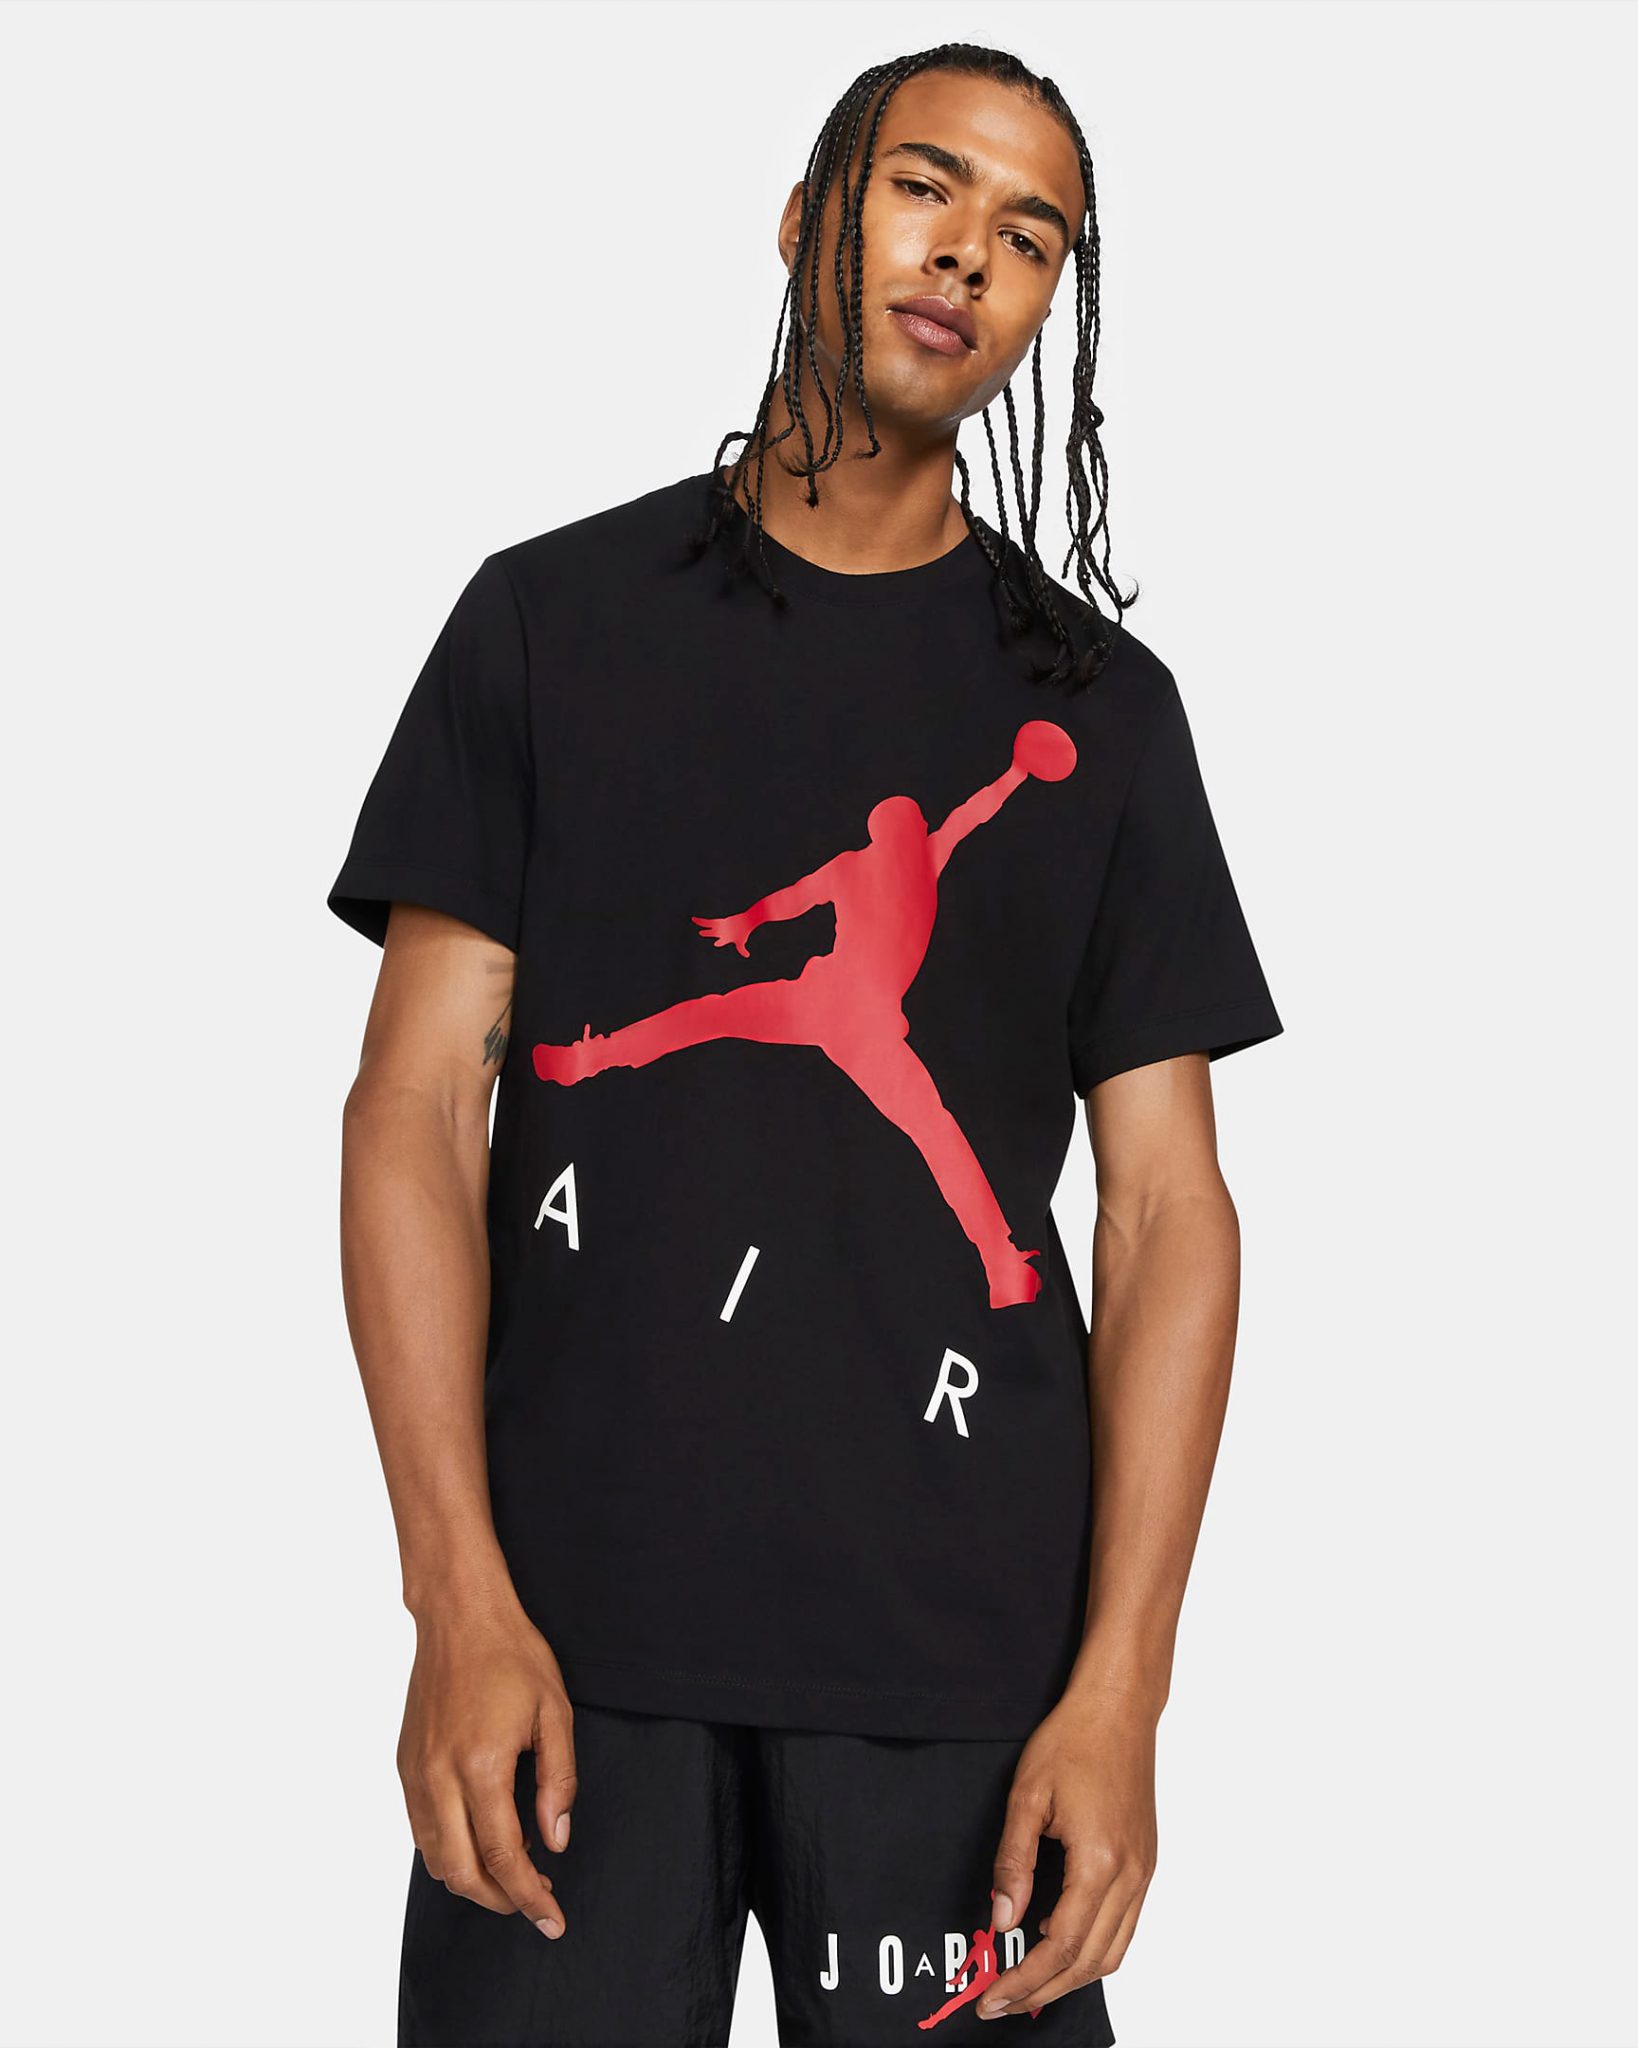 Air Jordan 11 CMFT Low Bred Shirts Hats Clothing Outfits